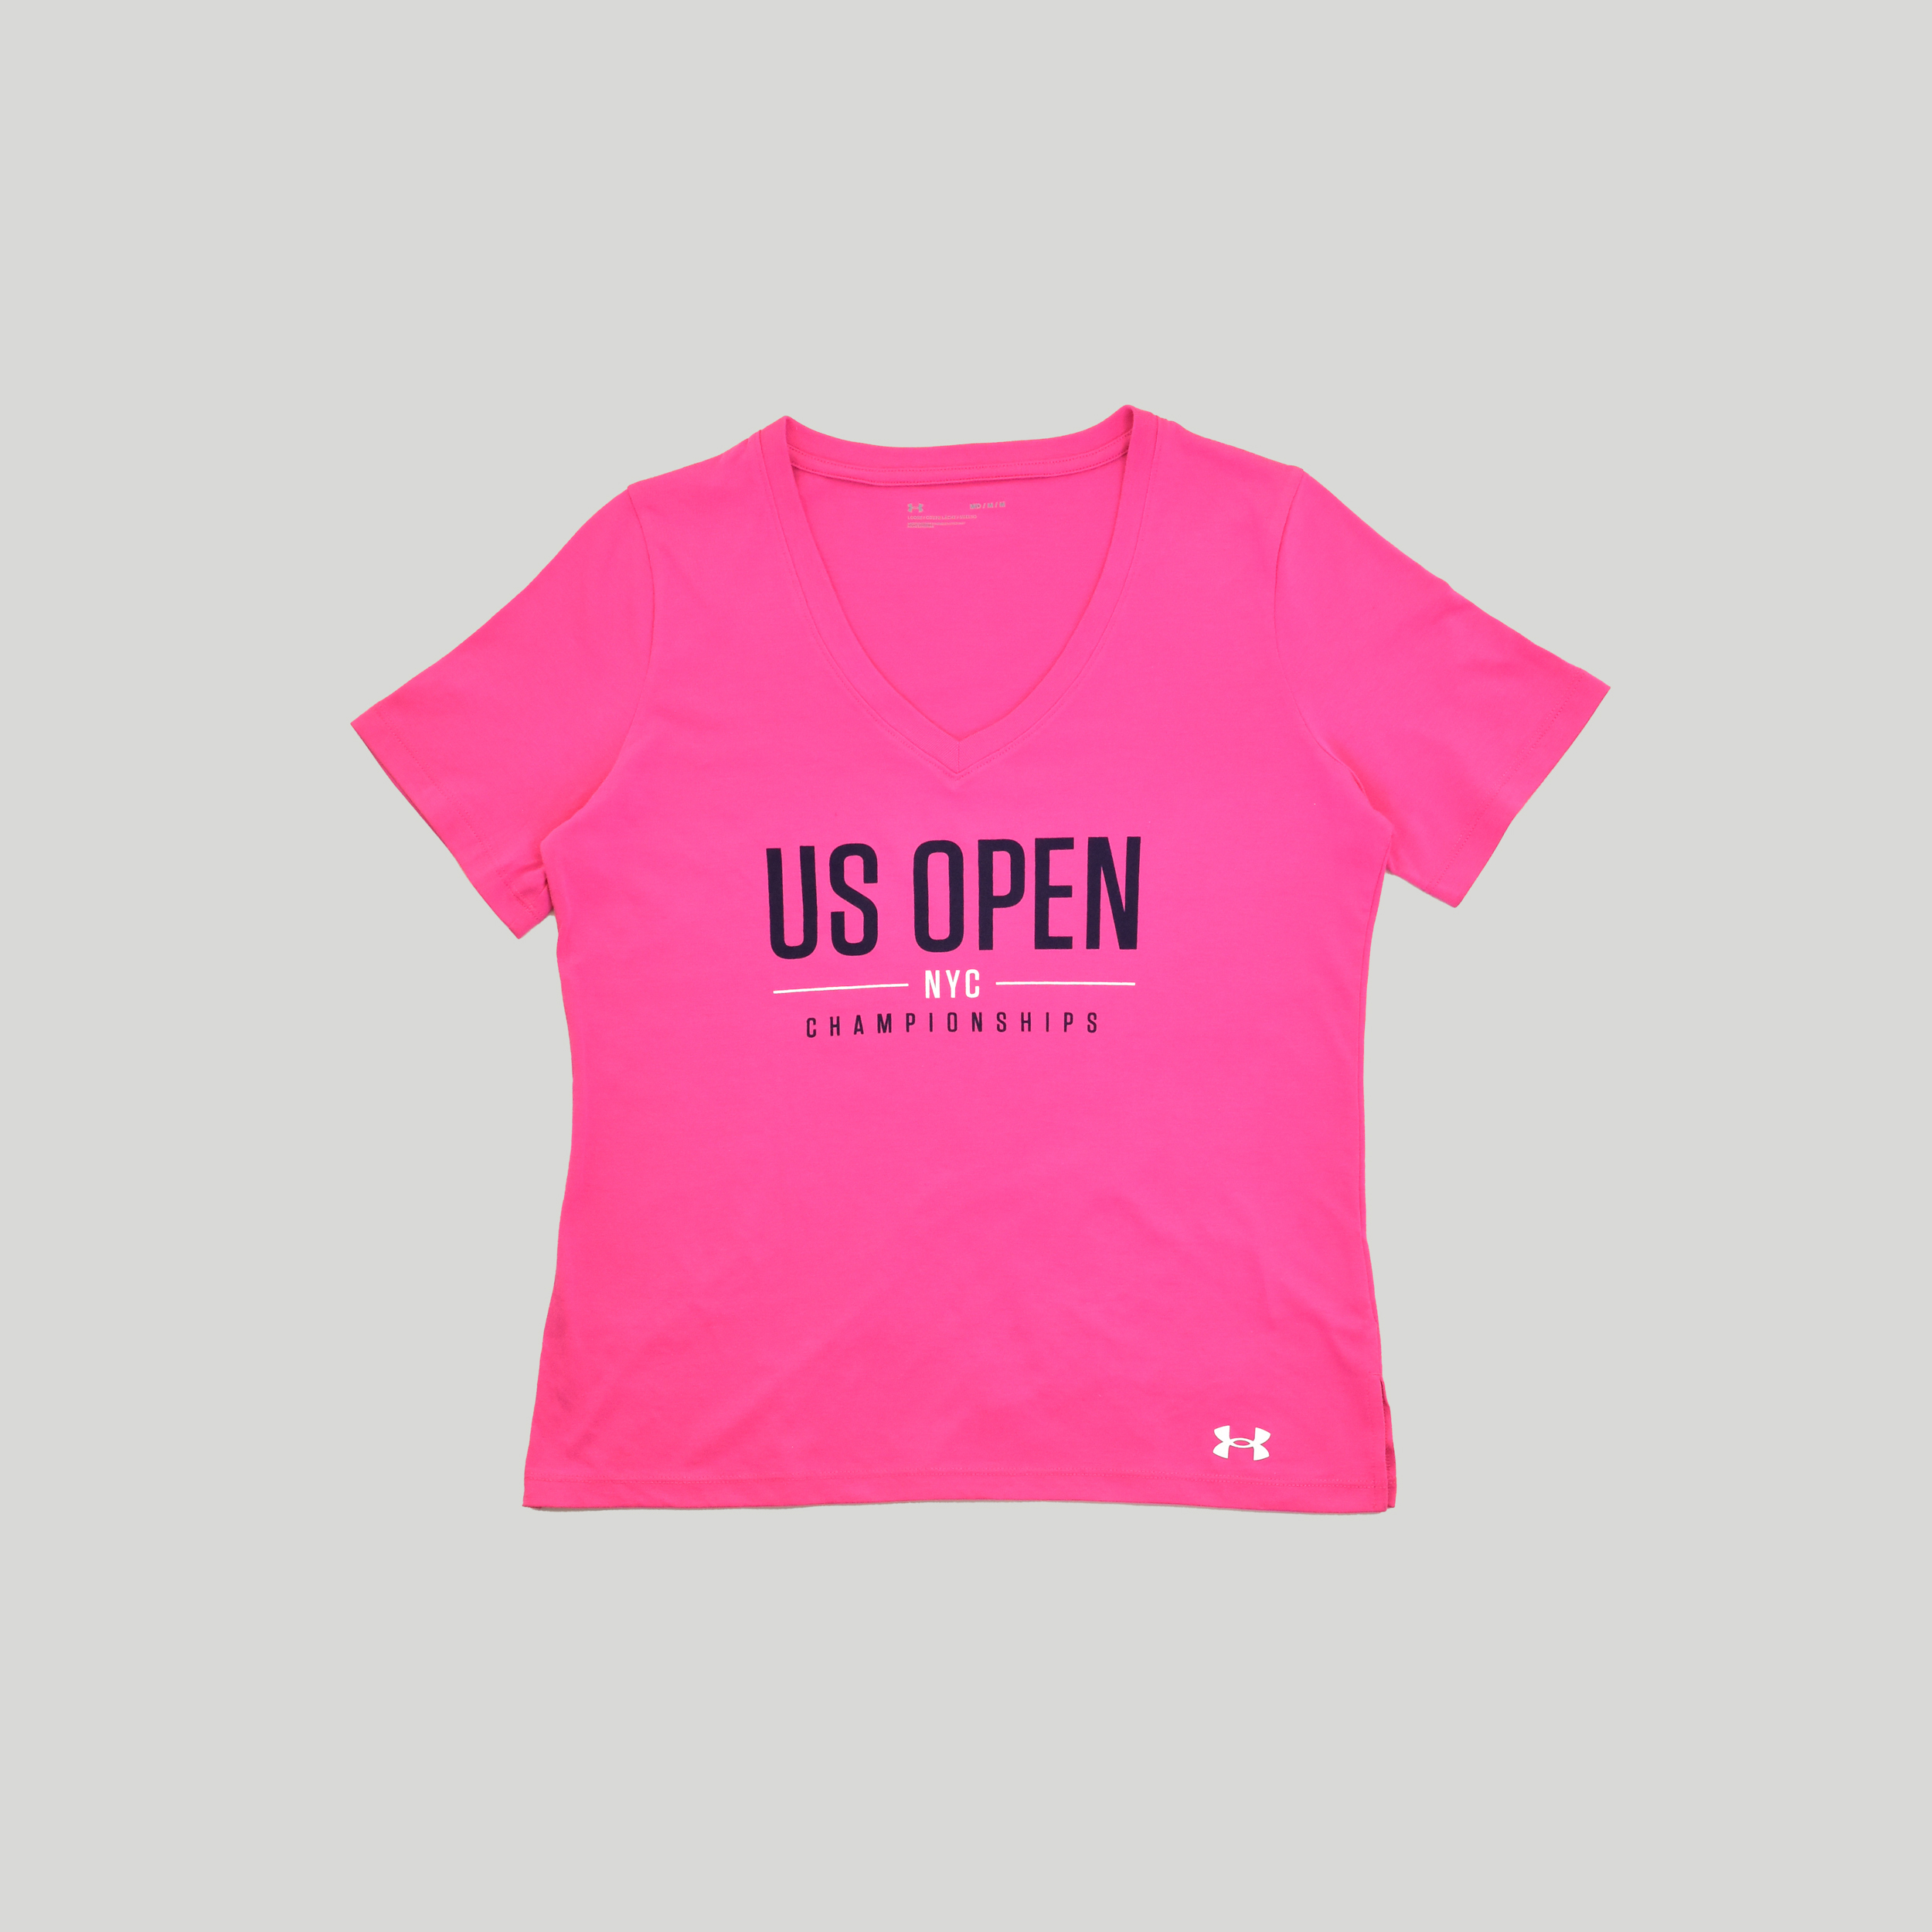 US Open Under Armour Women's Performance Cotton V-neck T-Shirt